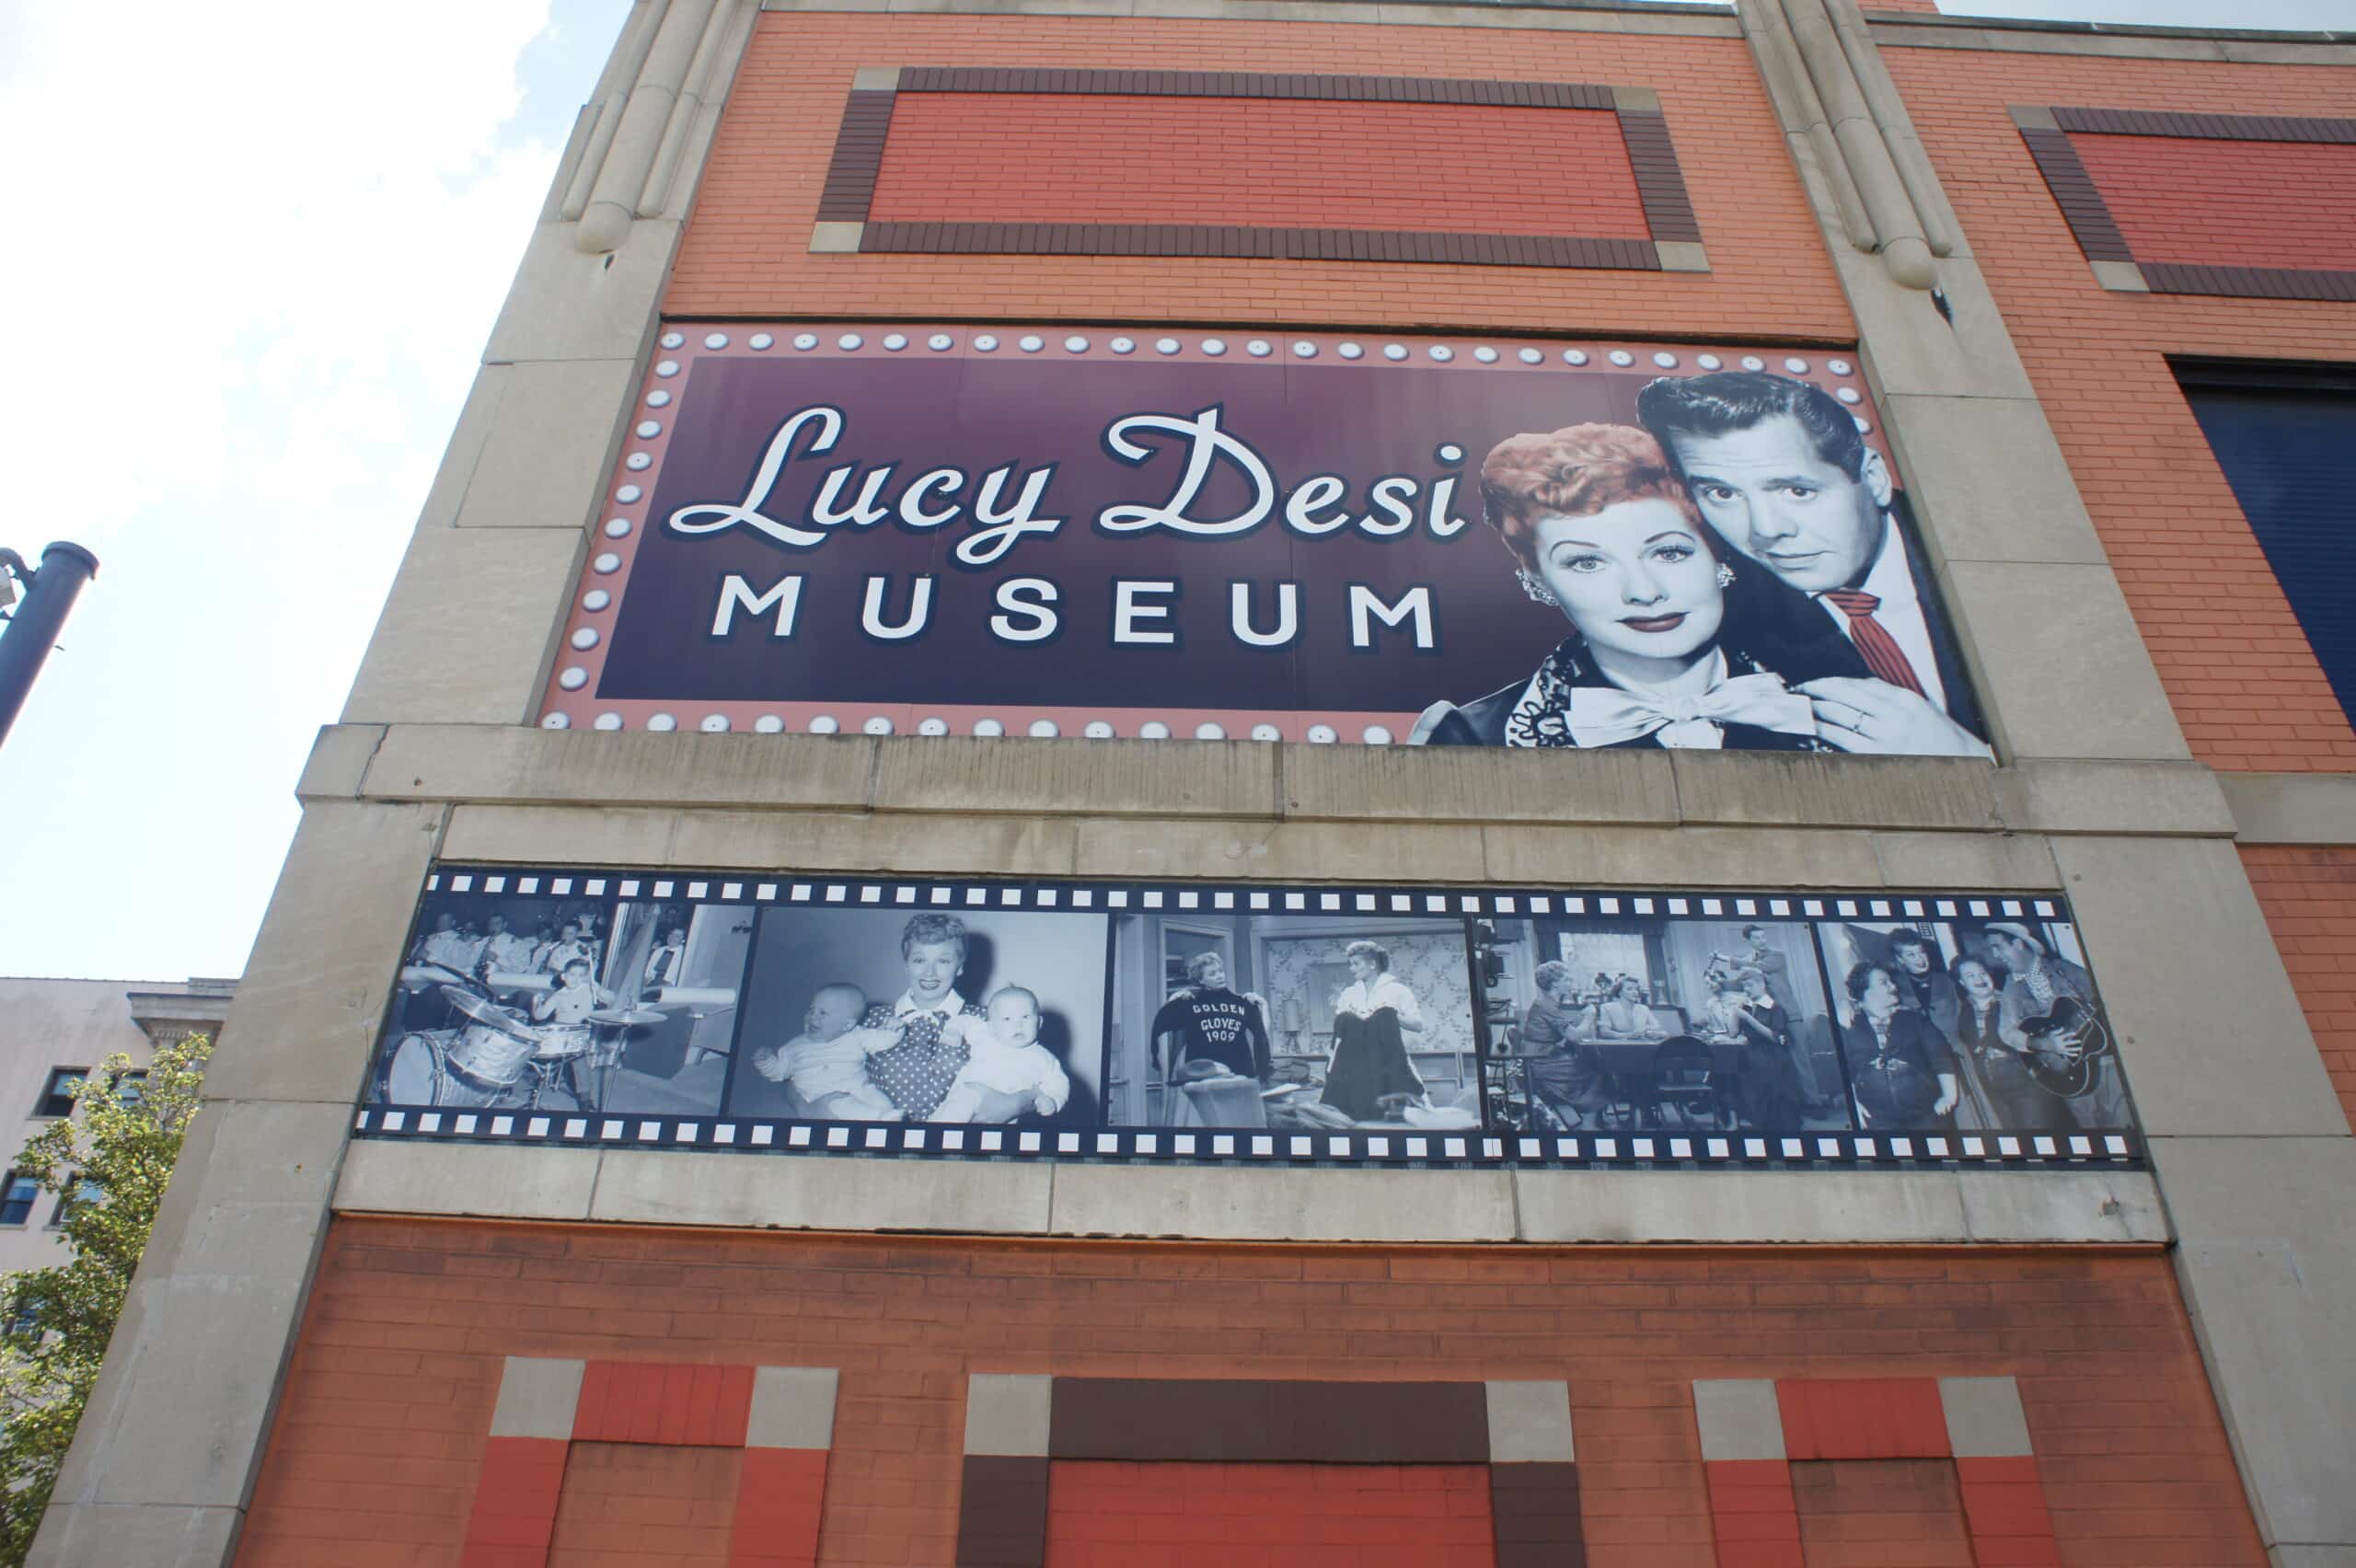 Lucy Desi Museum